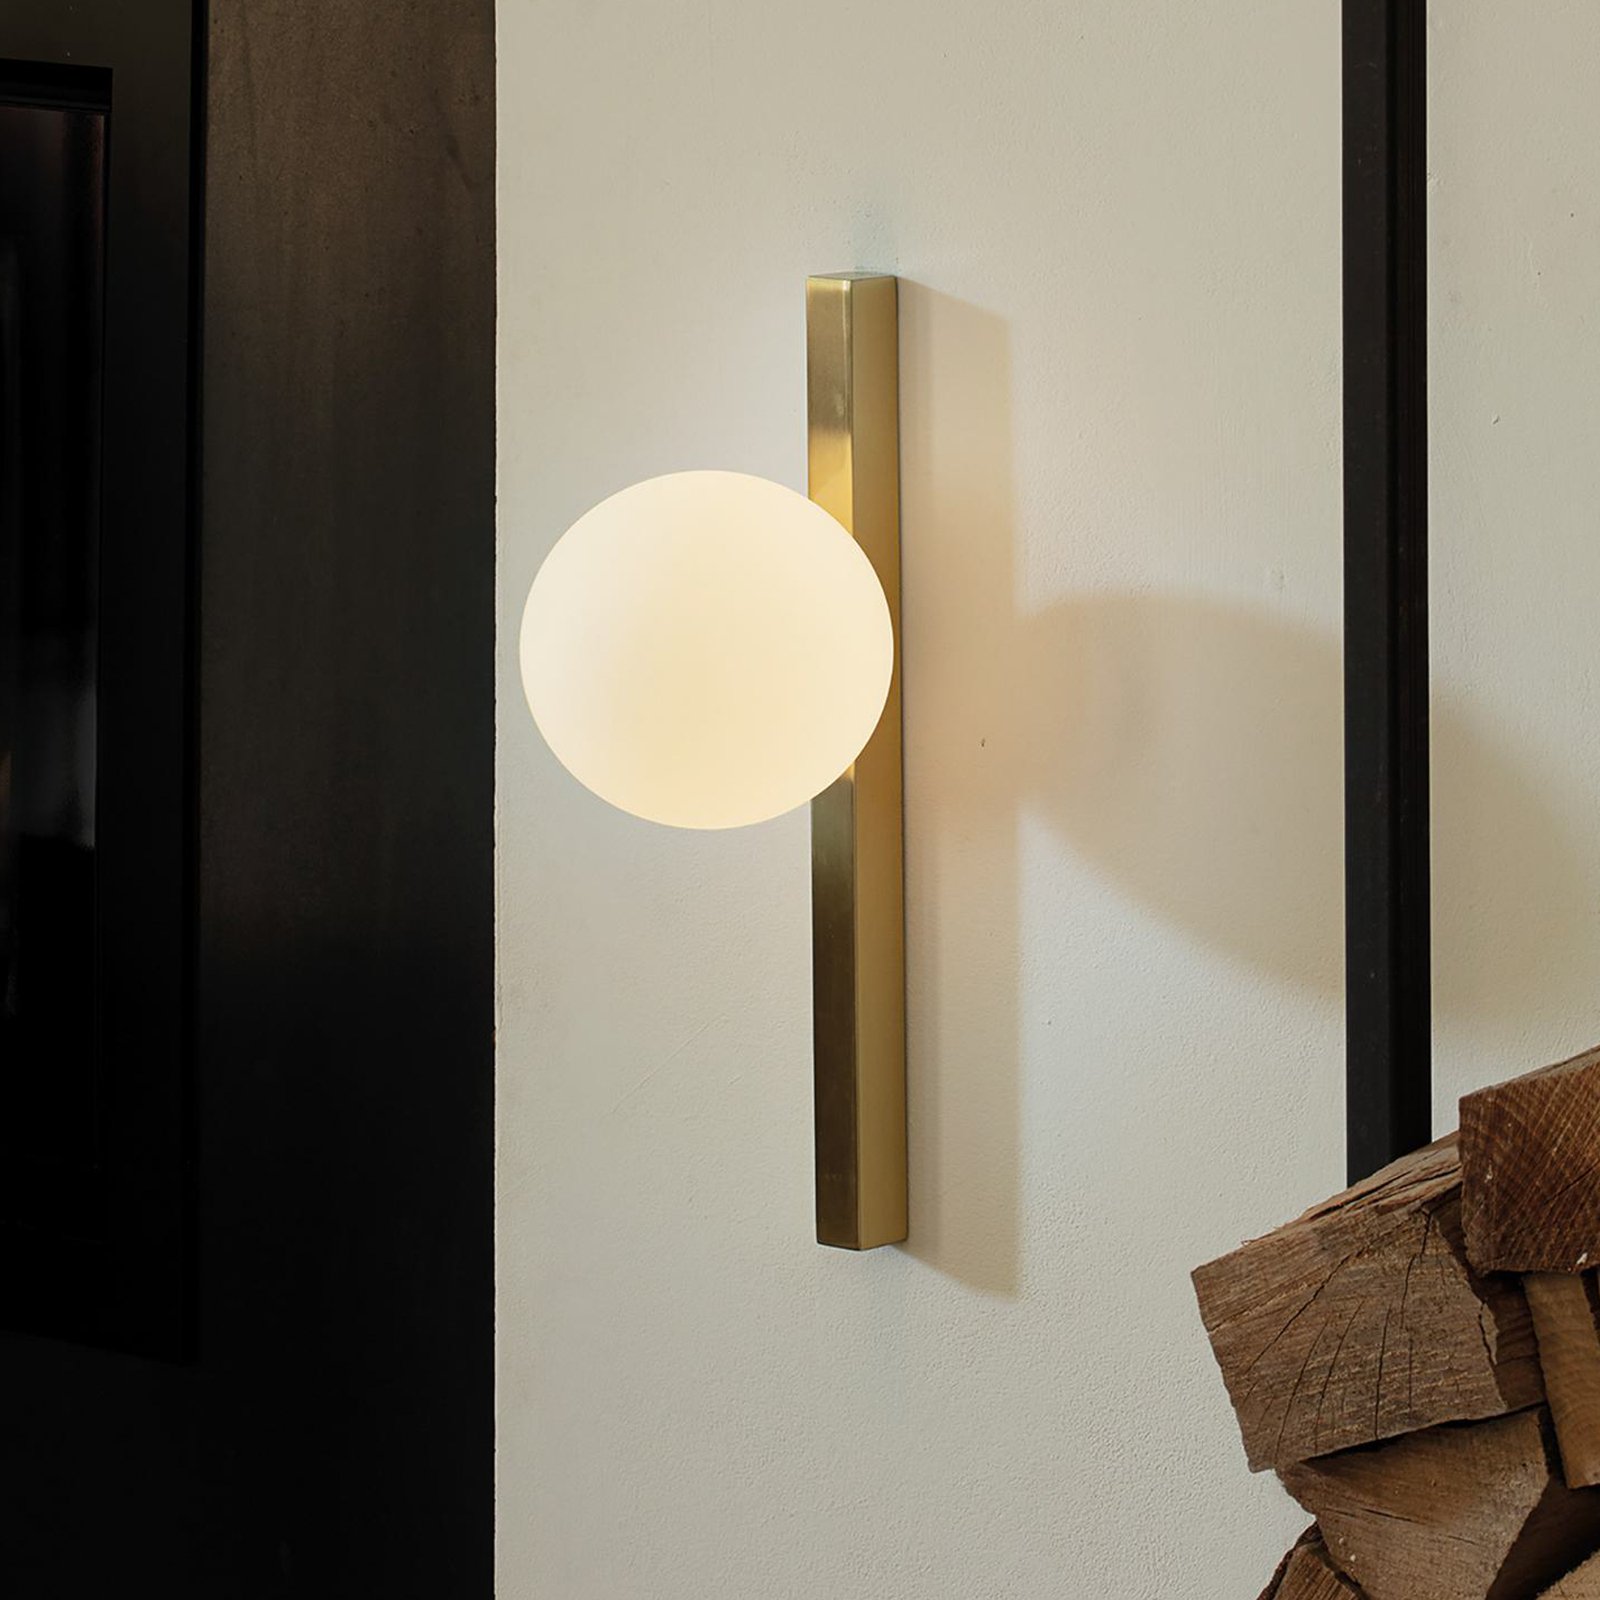 Ideal Lux zidna lampa Binomio u boji mesinga 1 žarulja. Metalno staklo